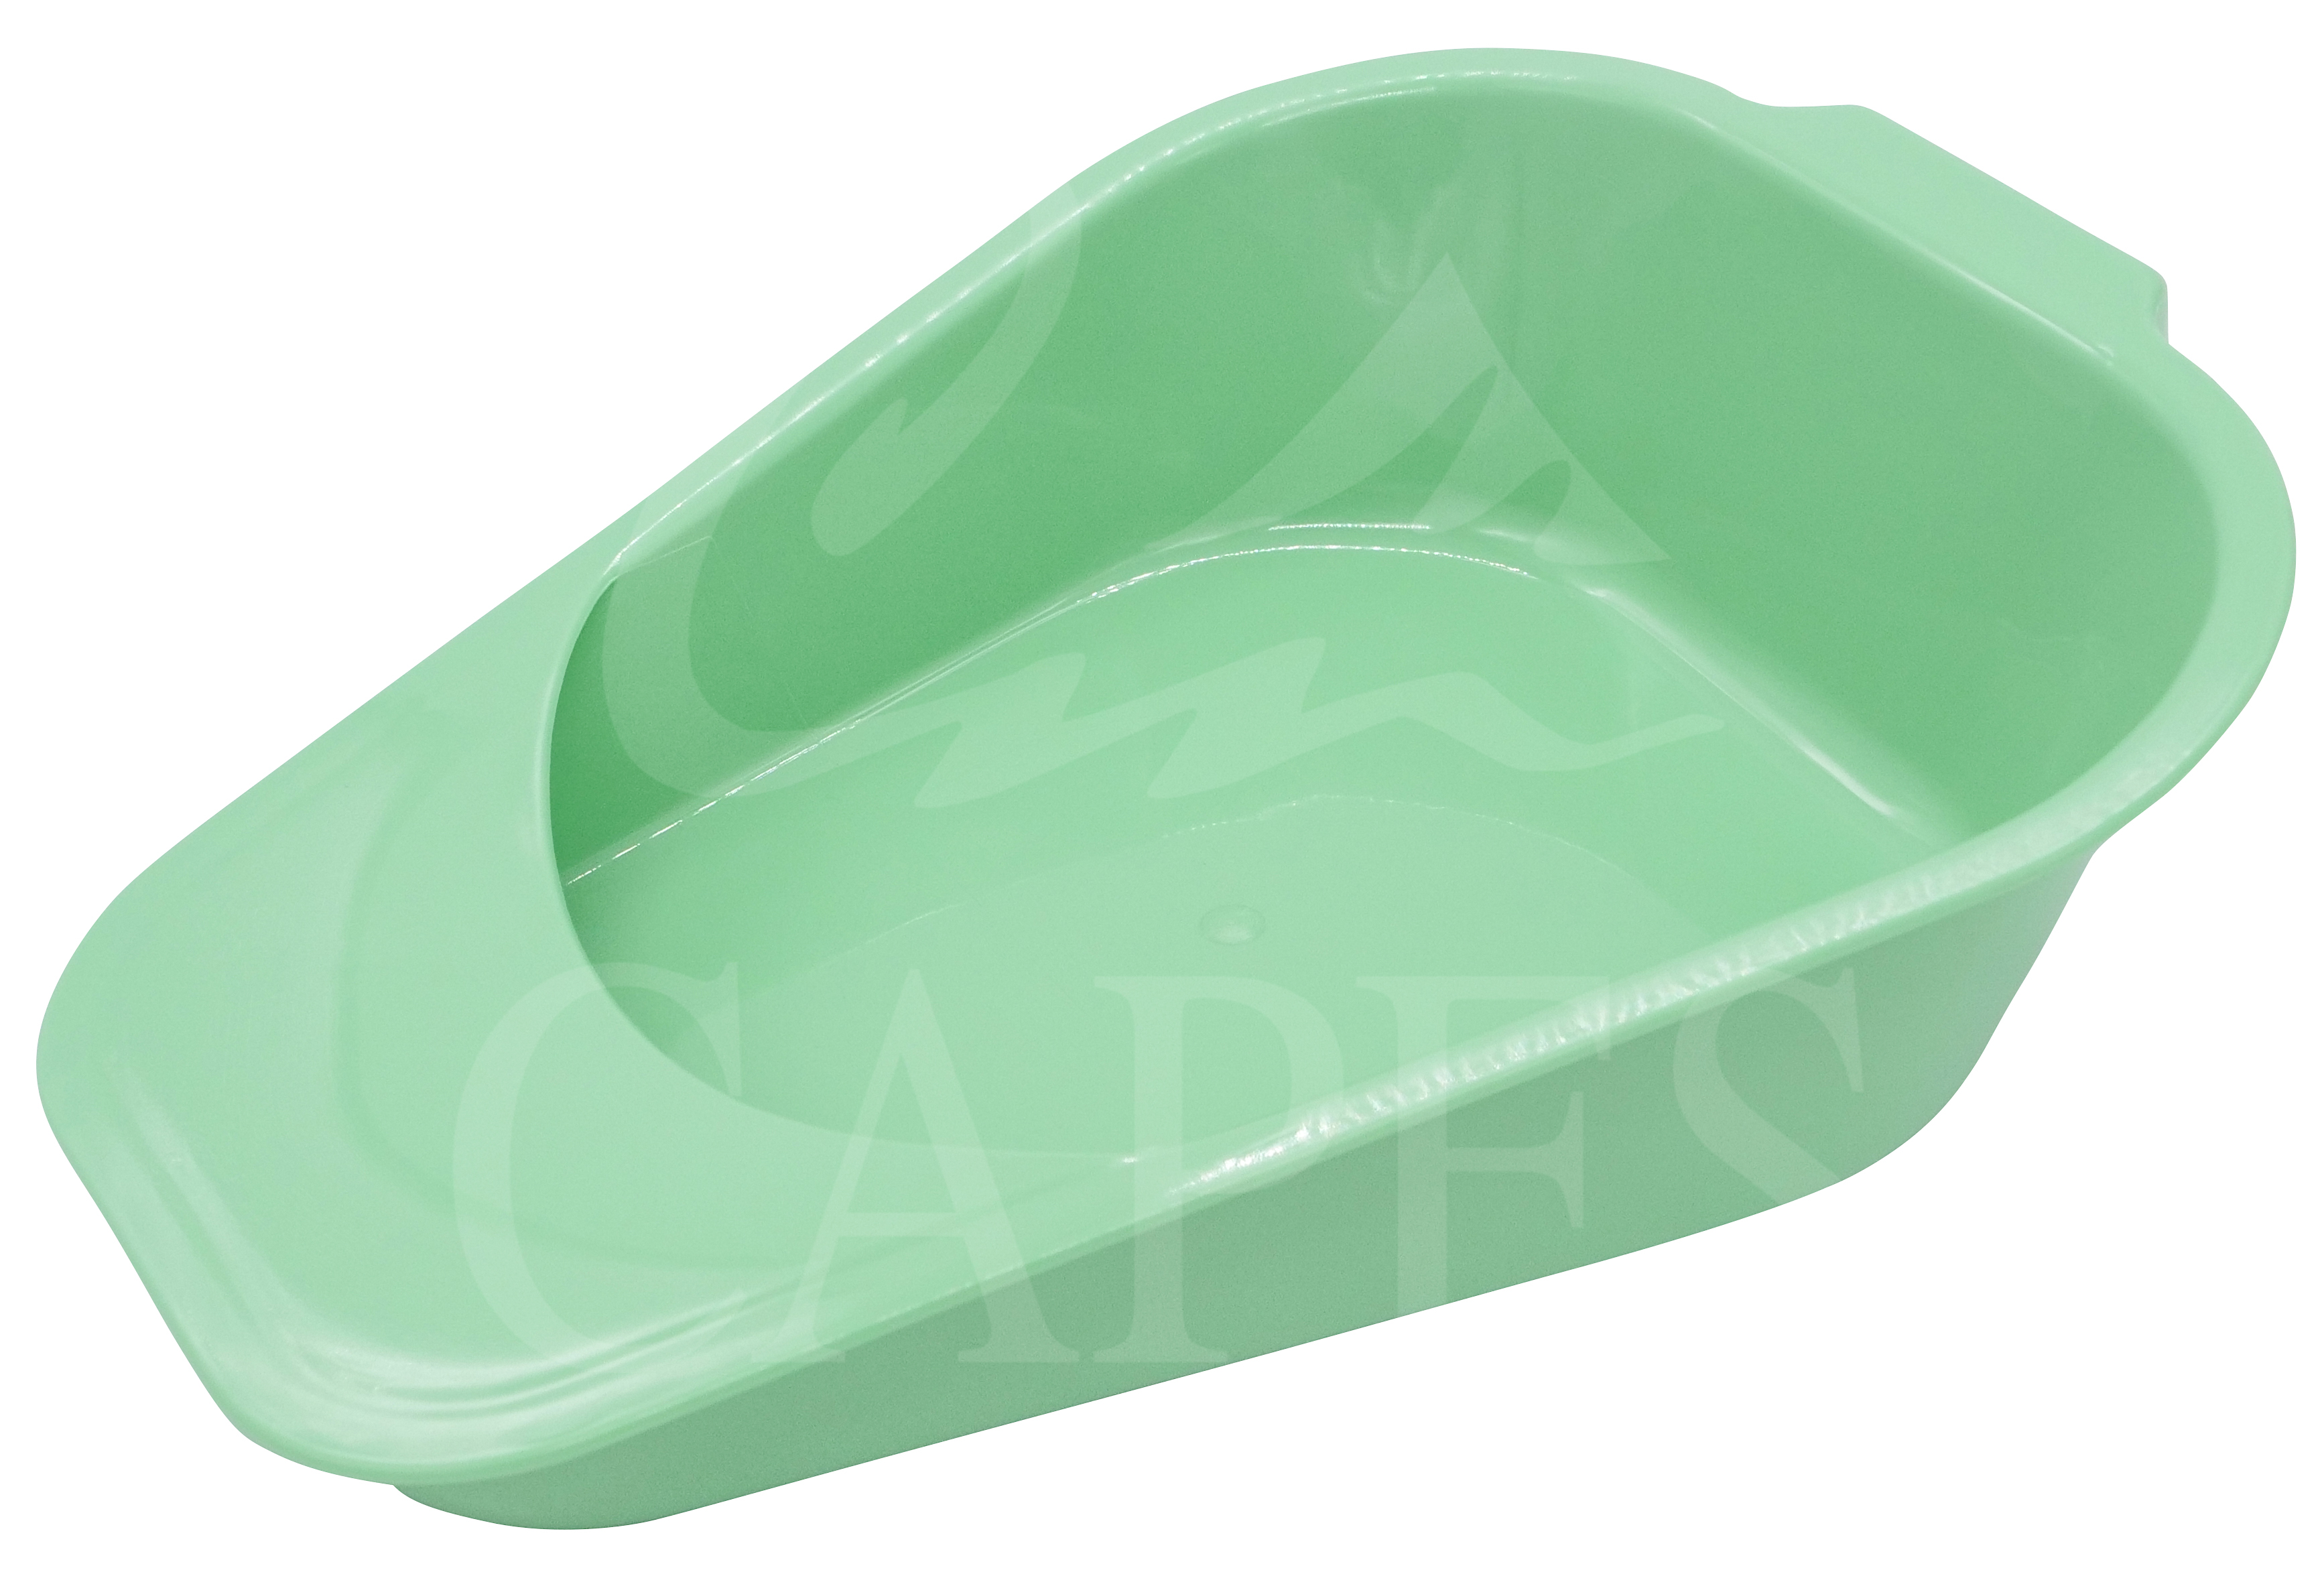 Bedpan Slipper Green 320x240 Autoplas image 0